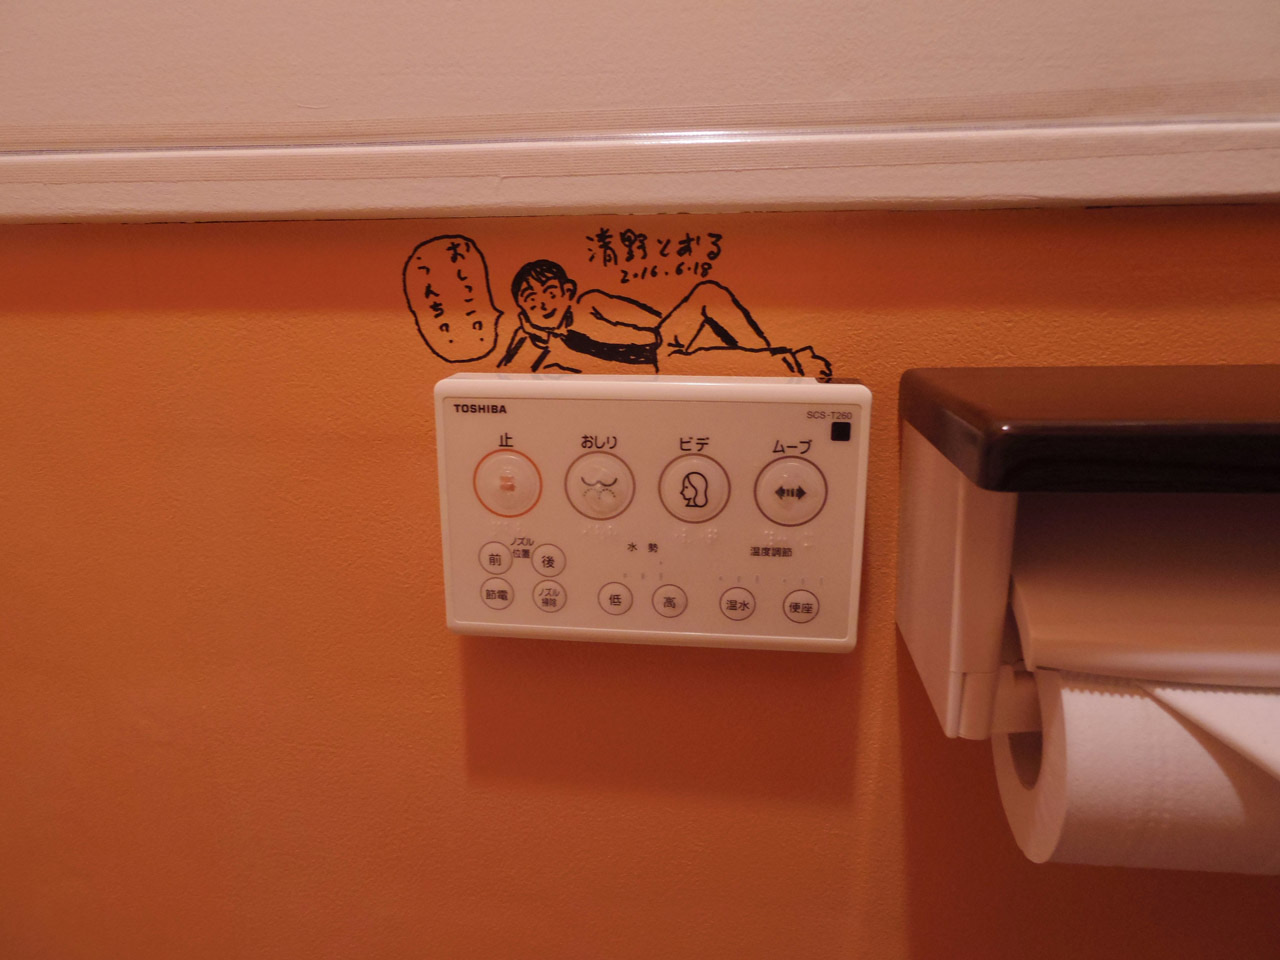 graffiti in secret nintendo bar bathroom